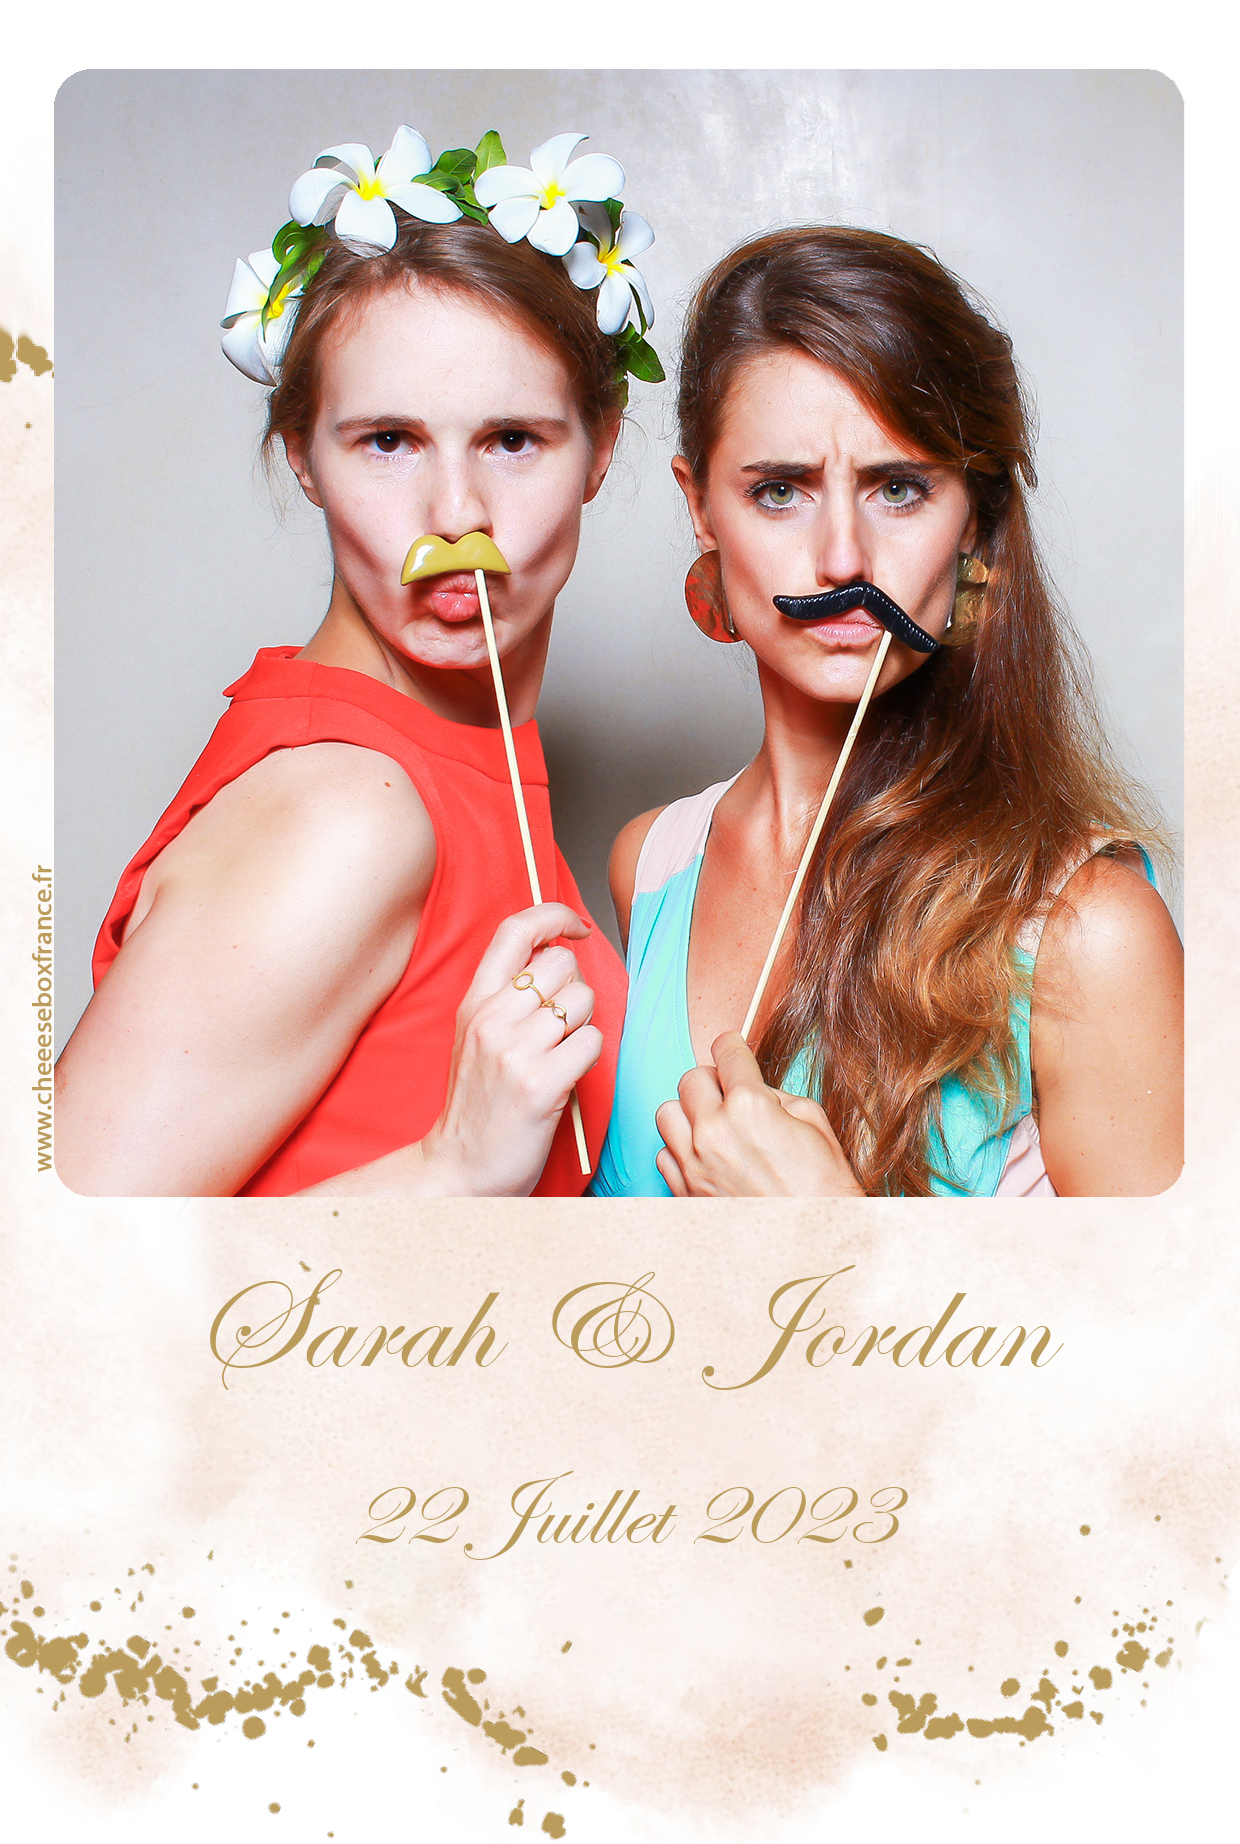 Personnalisation photo - Mariage de Sarah & Jordan